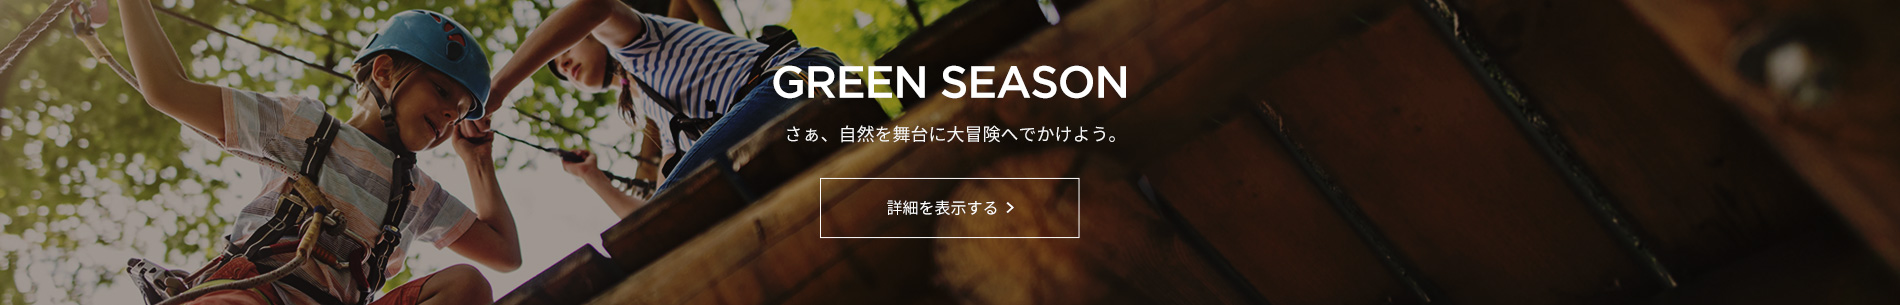 Green Season Banner